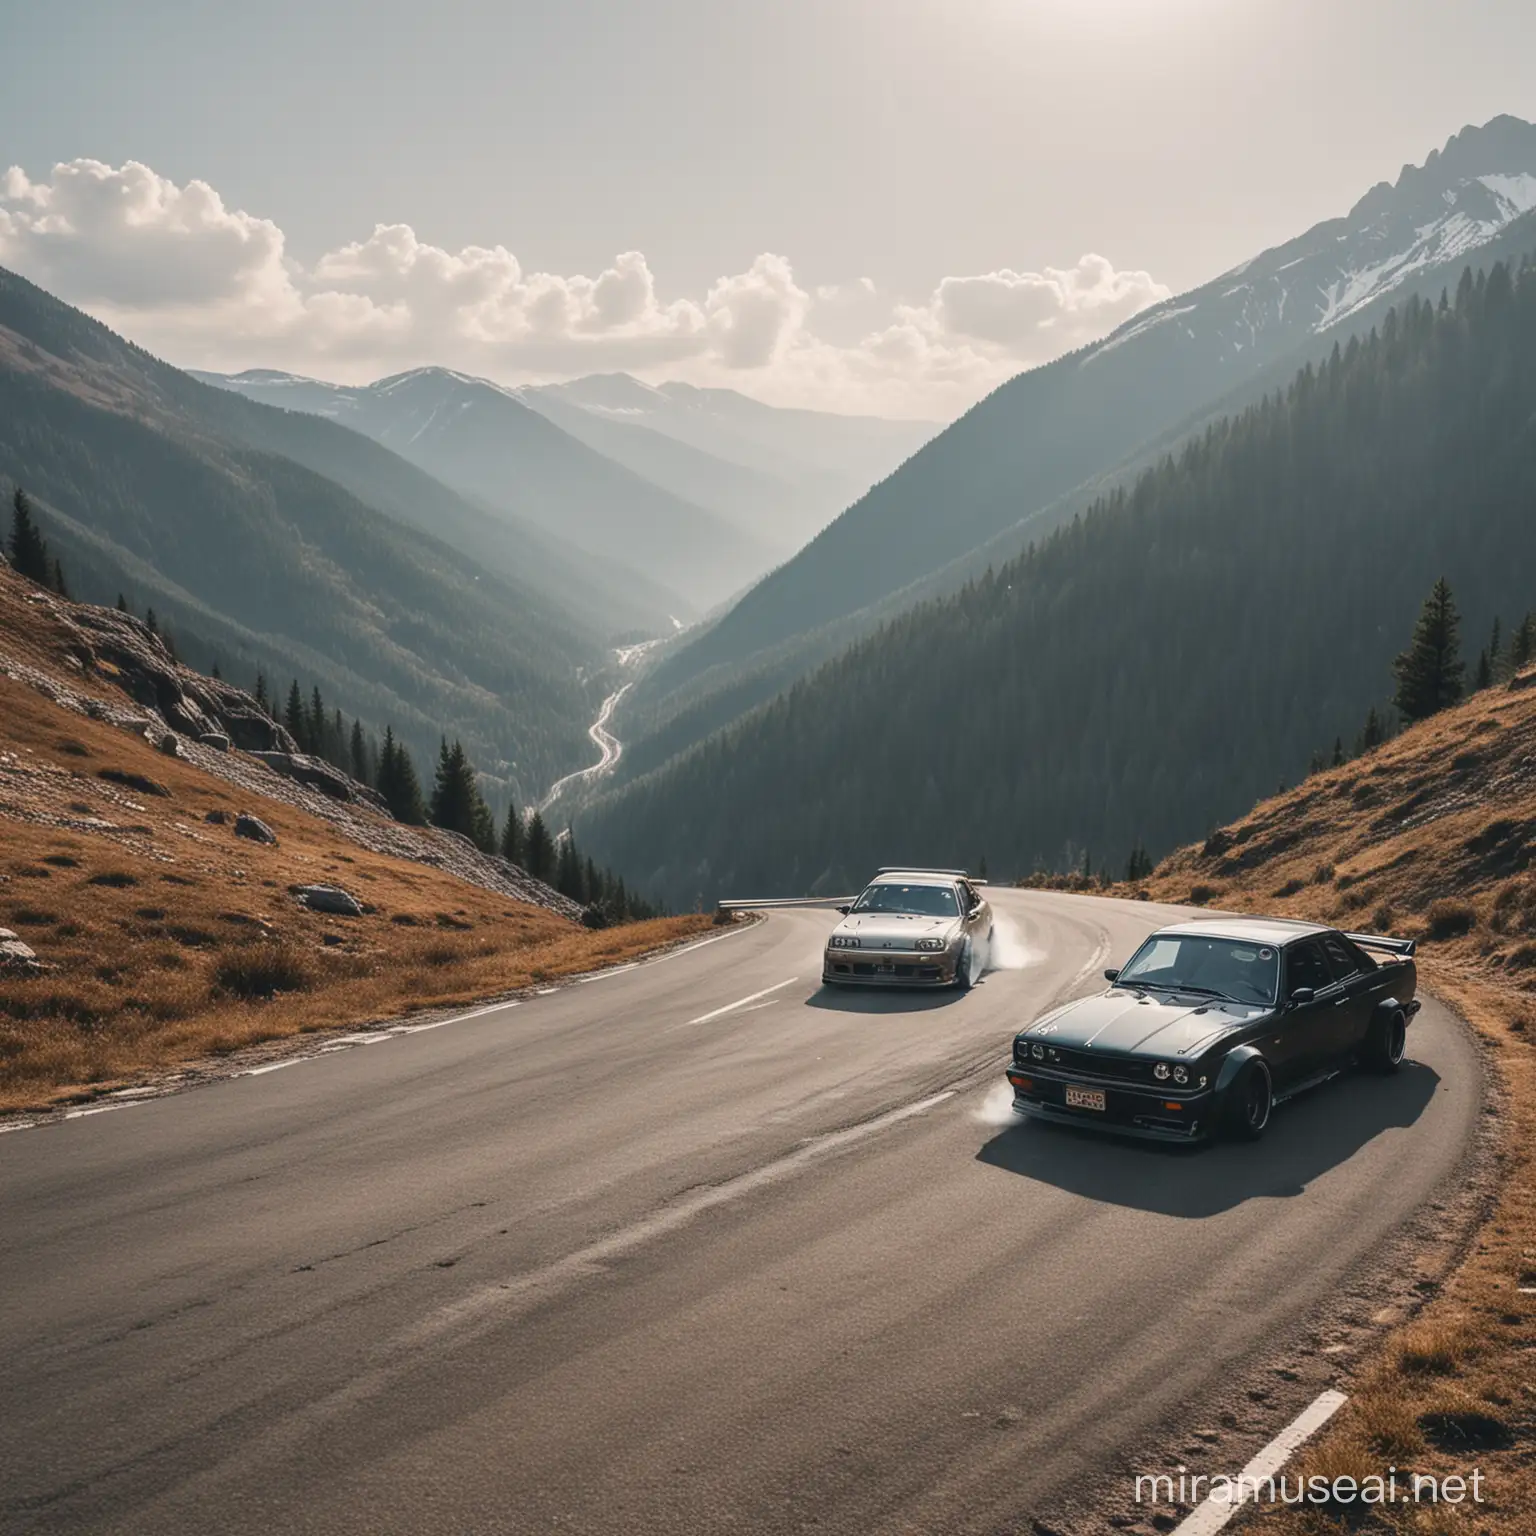 Mountain Drift Cars Racing Through Serpentine Roads